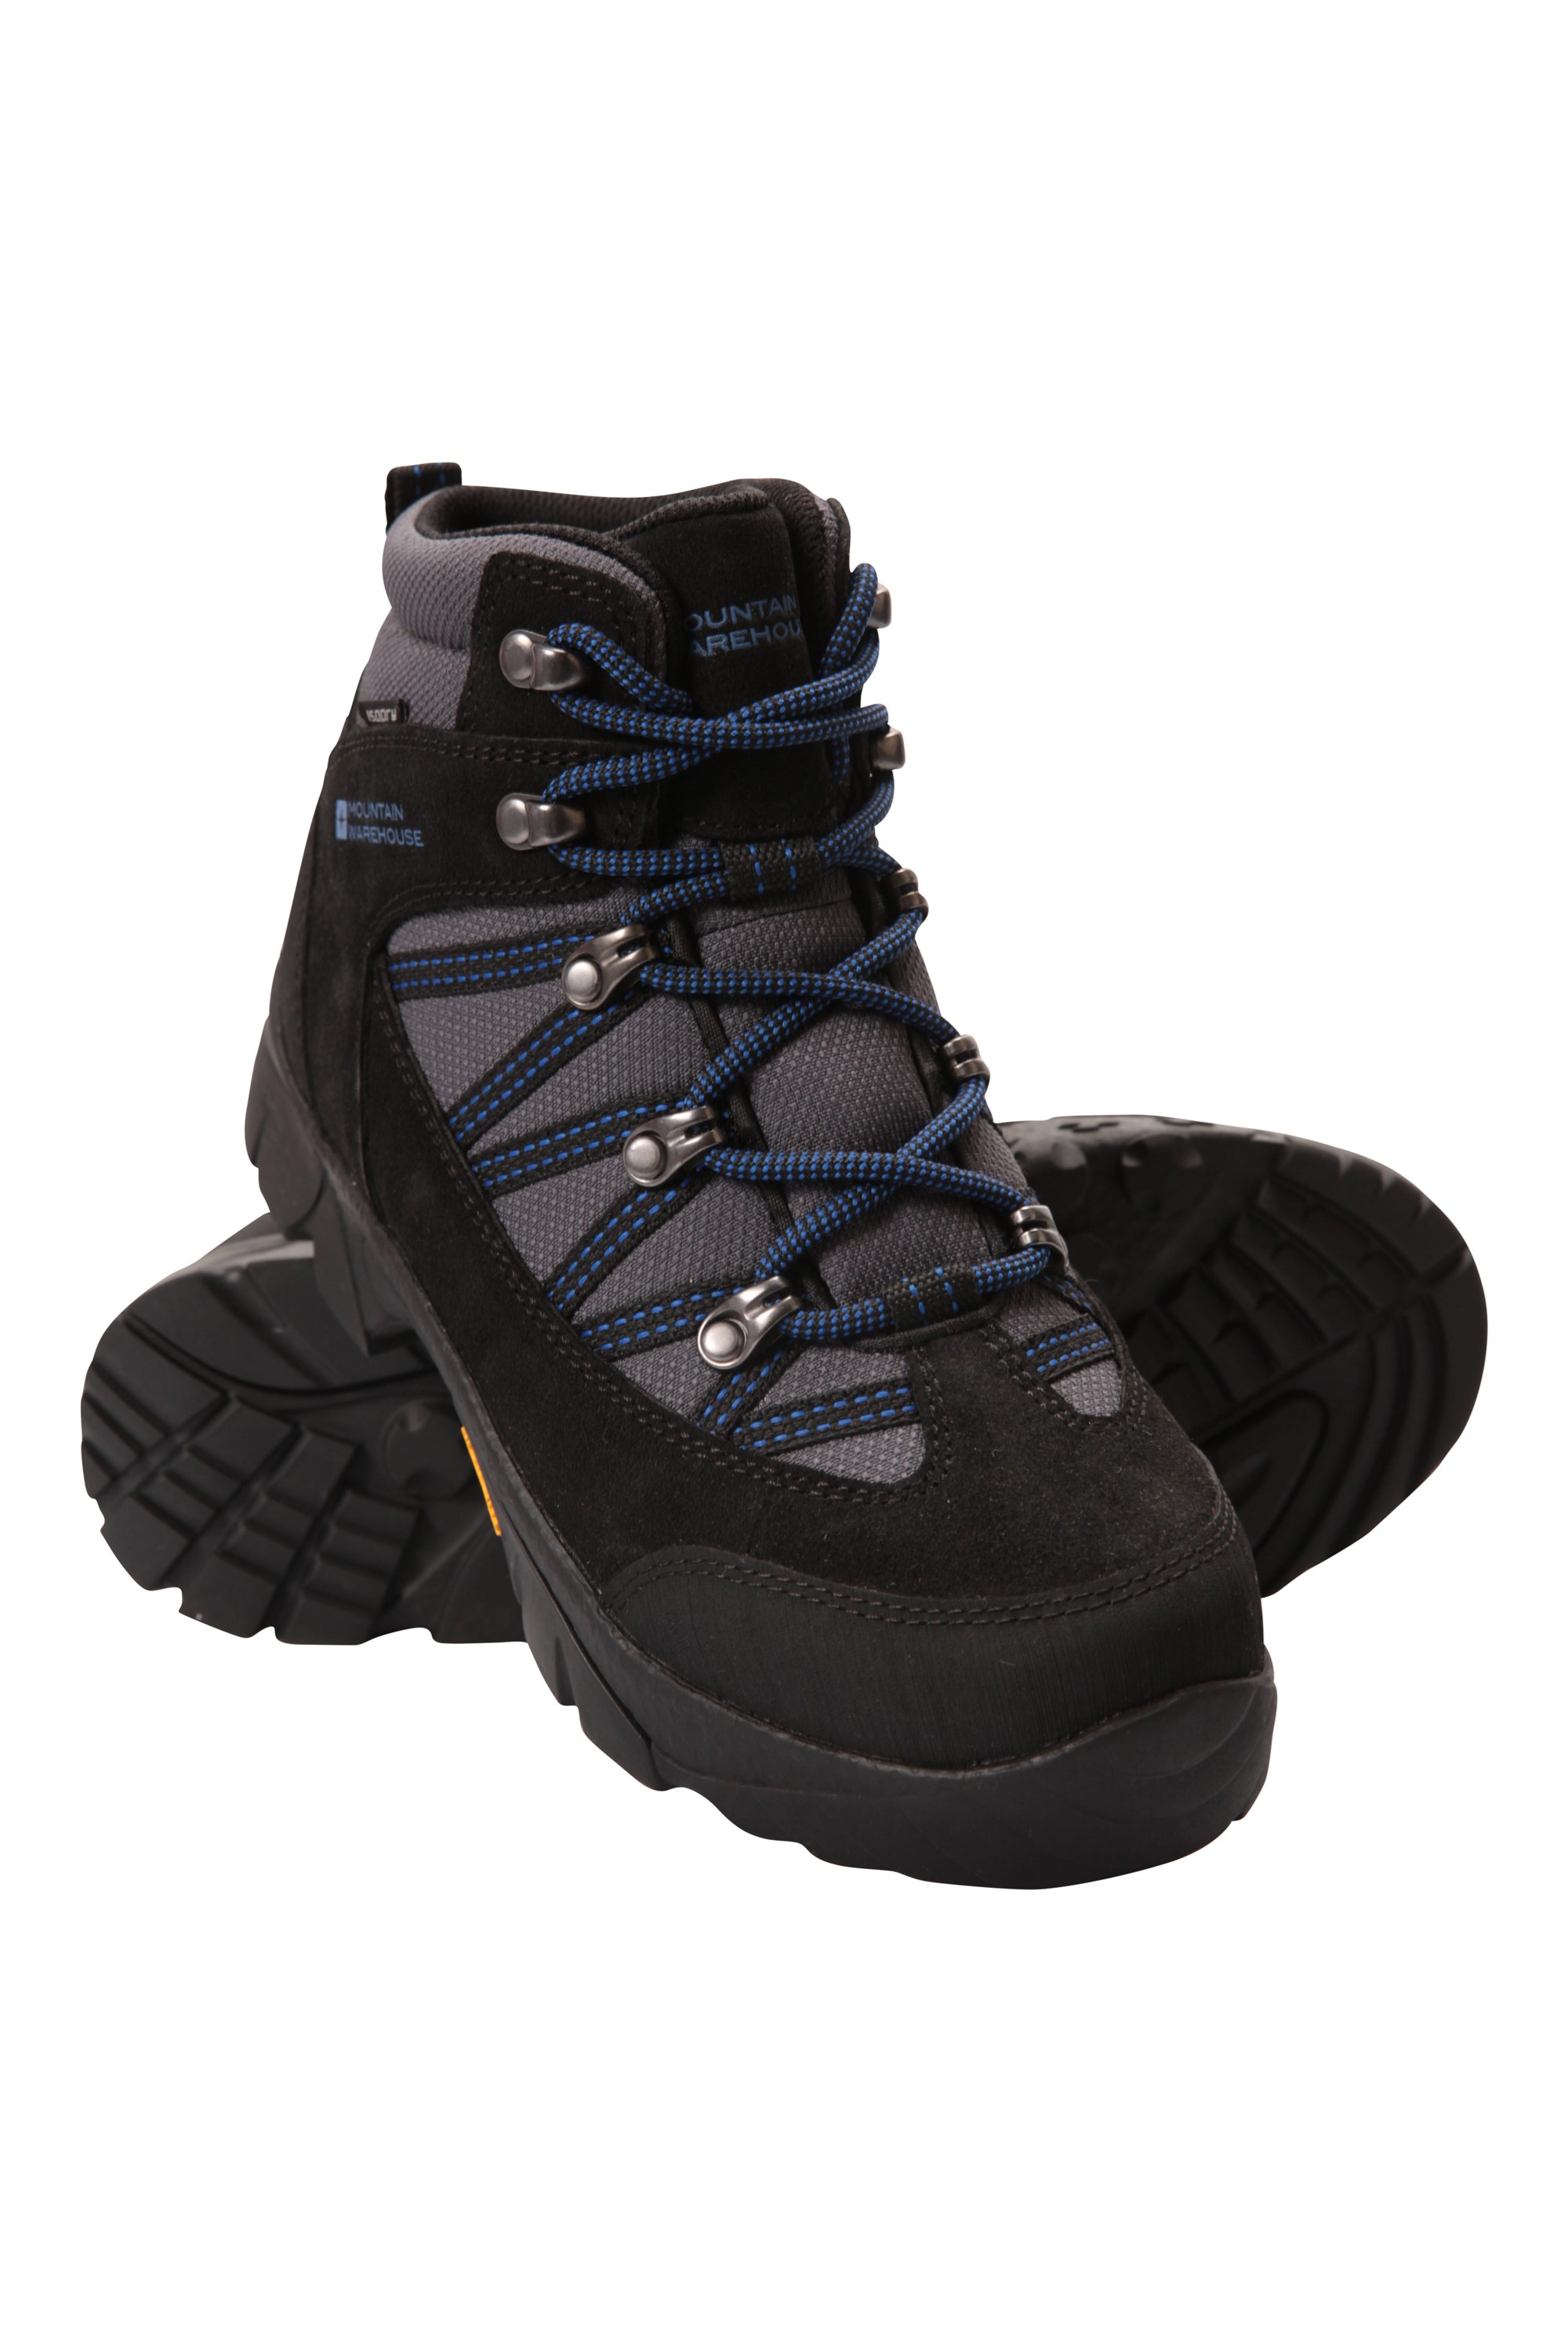 Mountain Warehouse Edinburgh Vibram Youth Waterproof Boots Blue